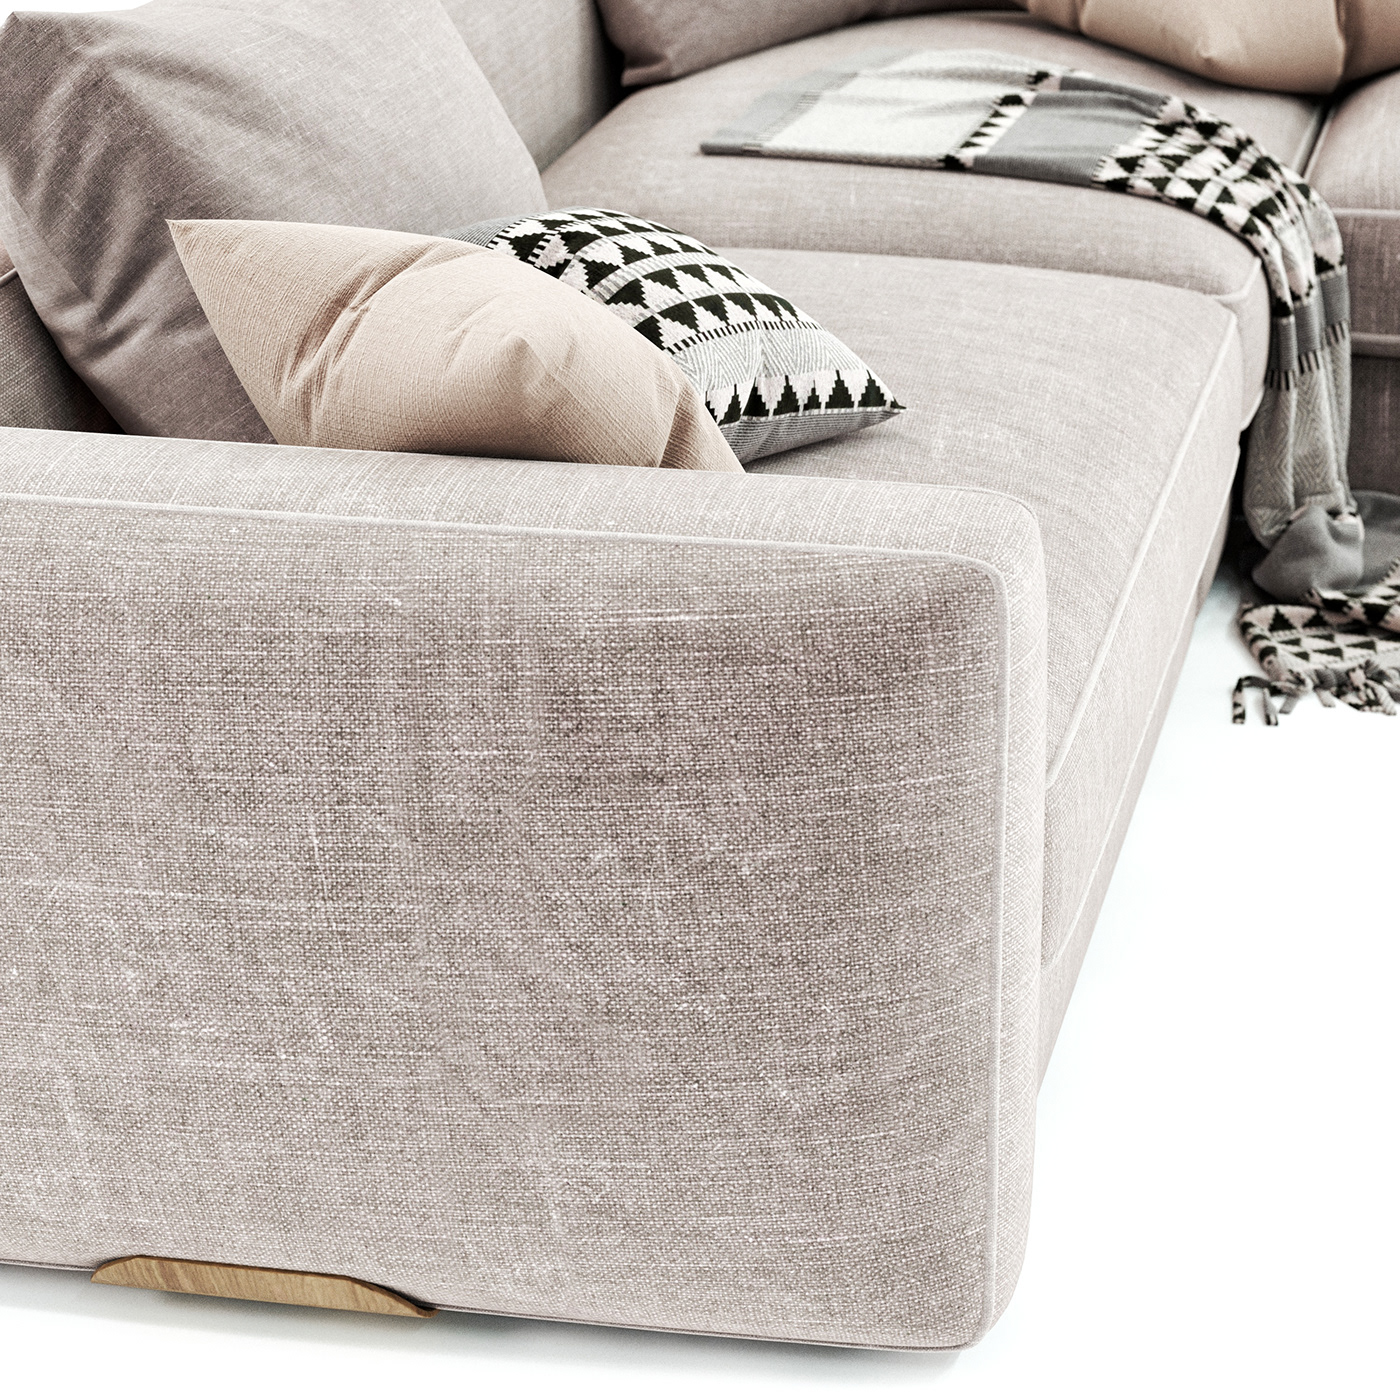 3D 3D model 3ds max design Flexform harper sectional sectional sofa  sofa V-ray